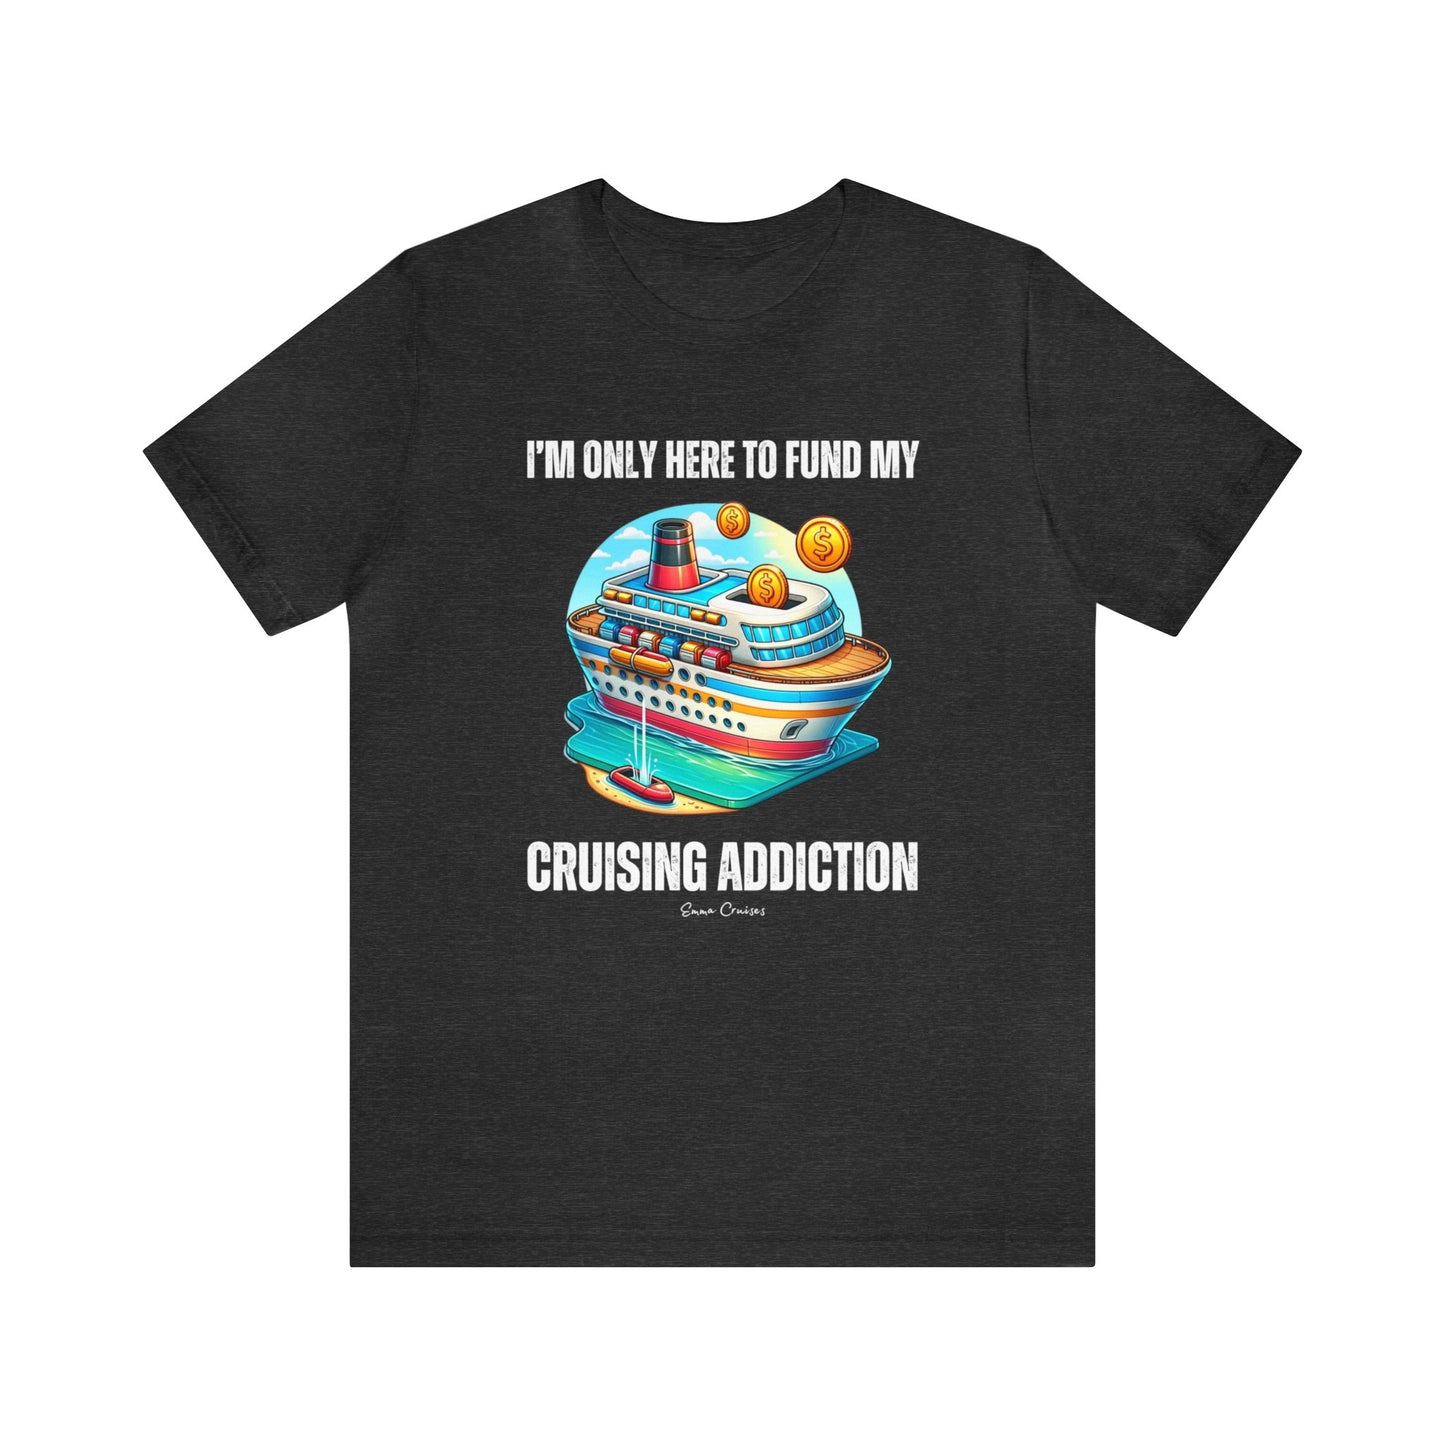 I'm Only Here to Fund My Cruising Addiction - UNISEX T-Shirt